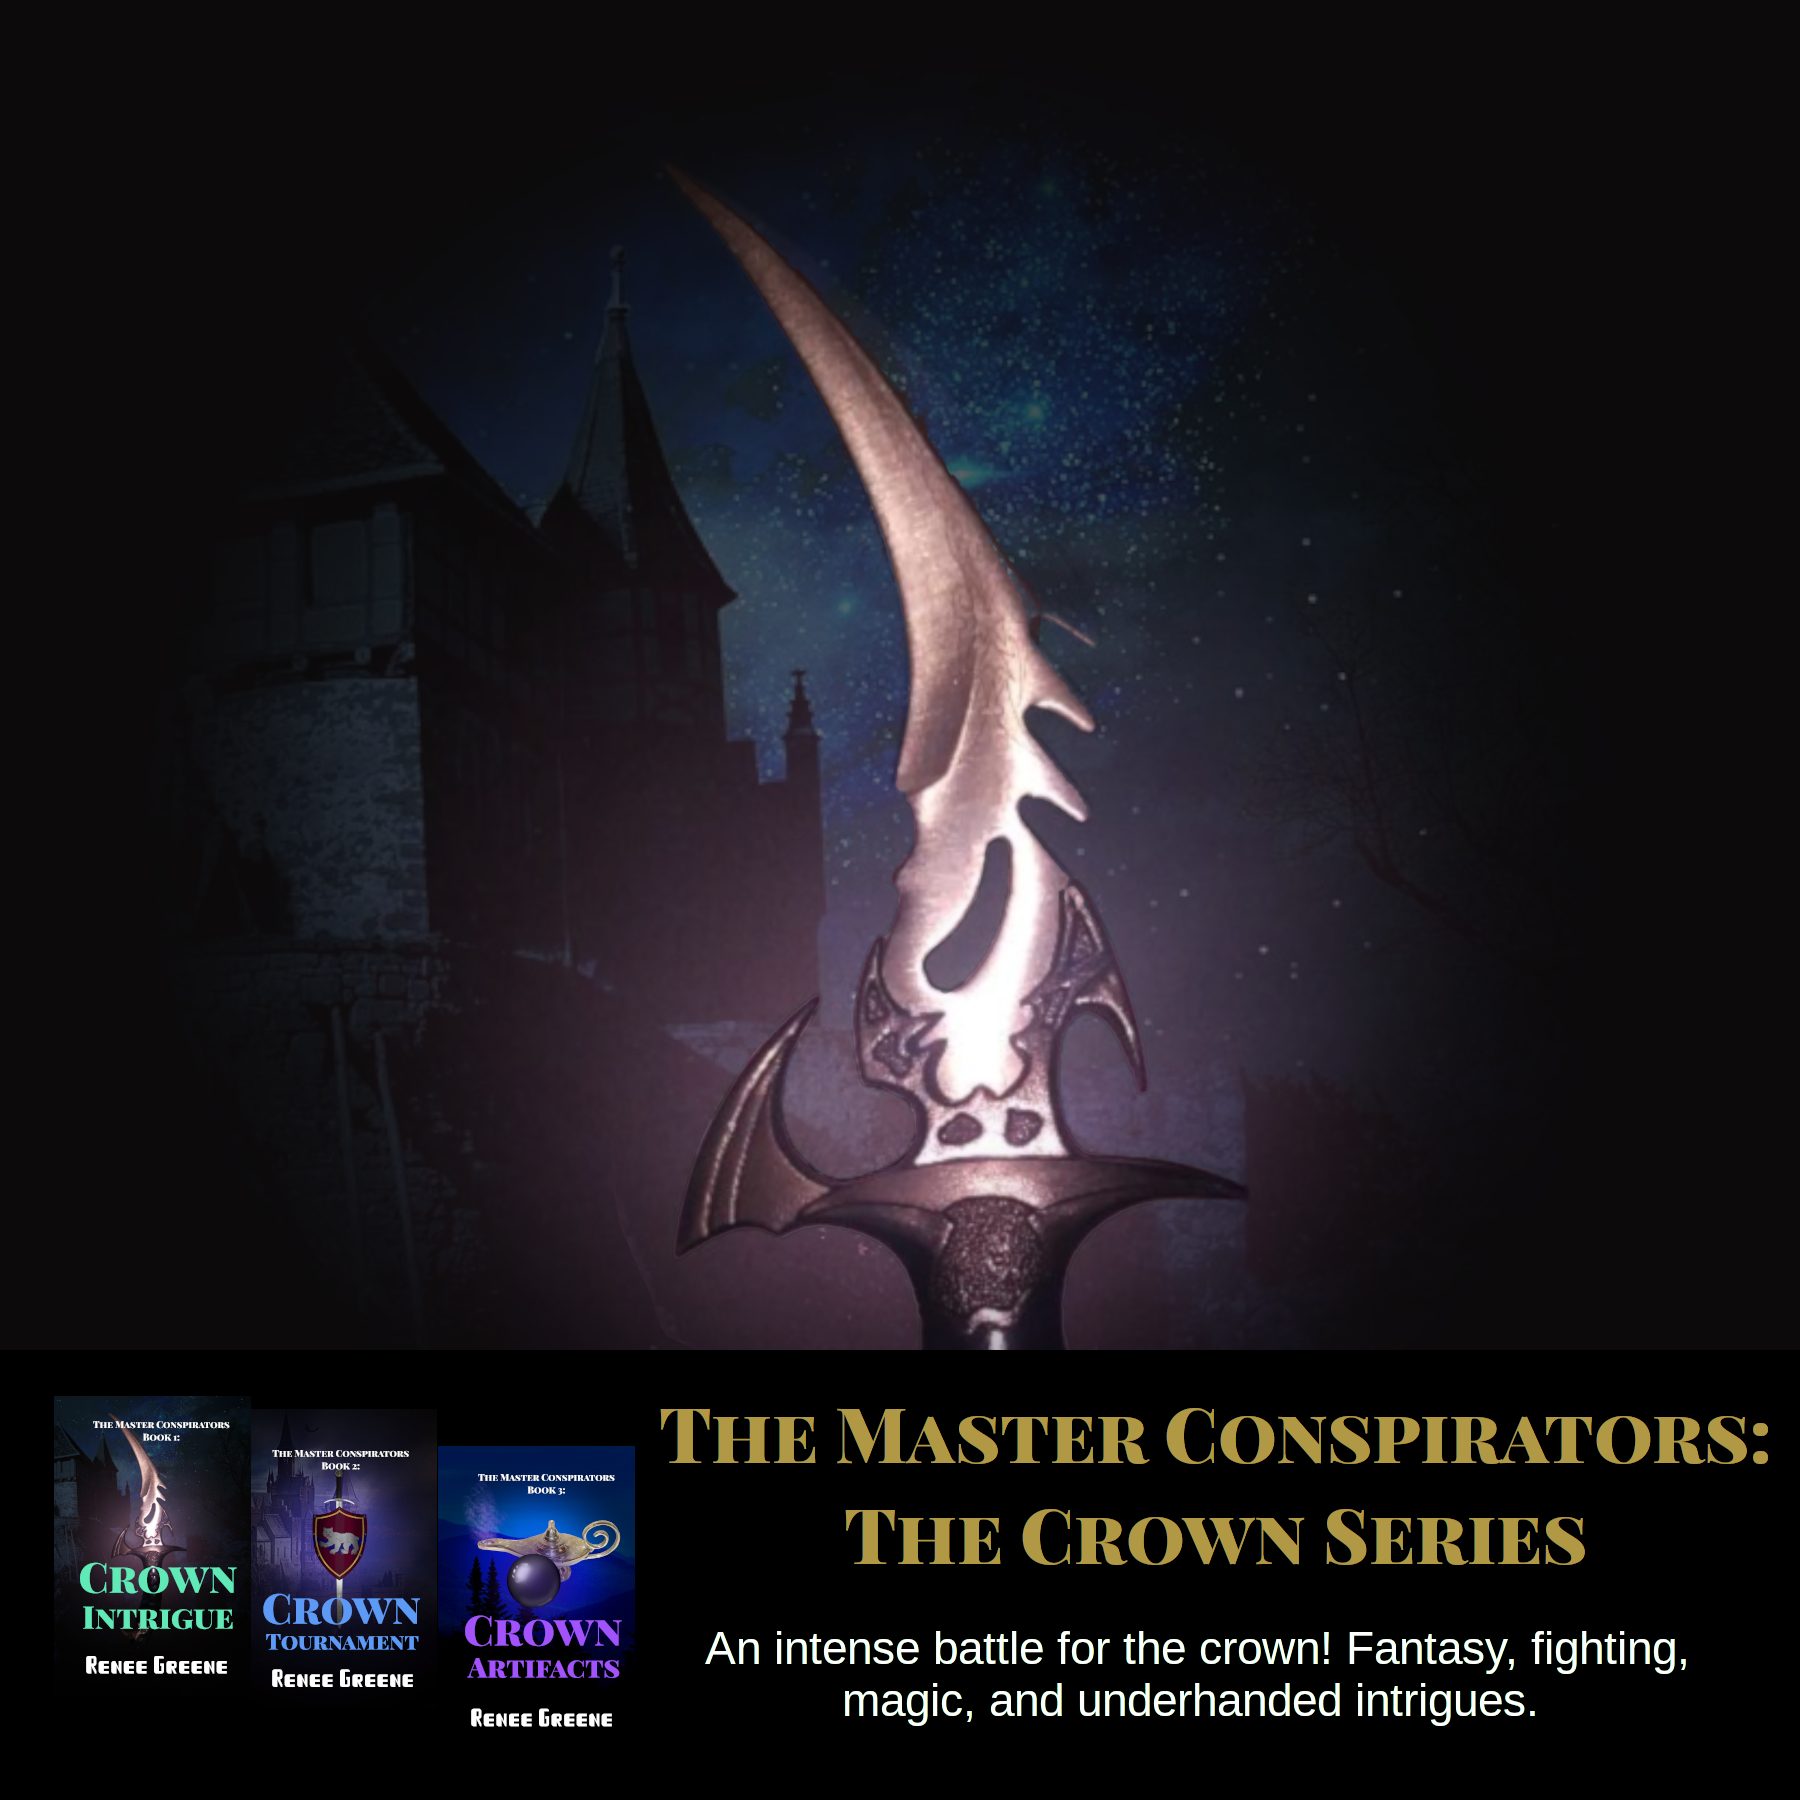 The Master Conspirators series